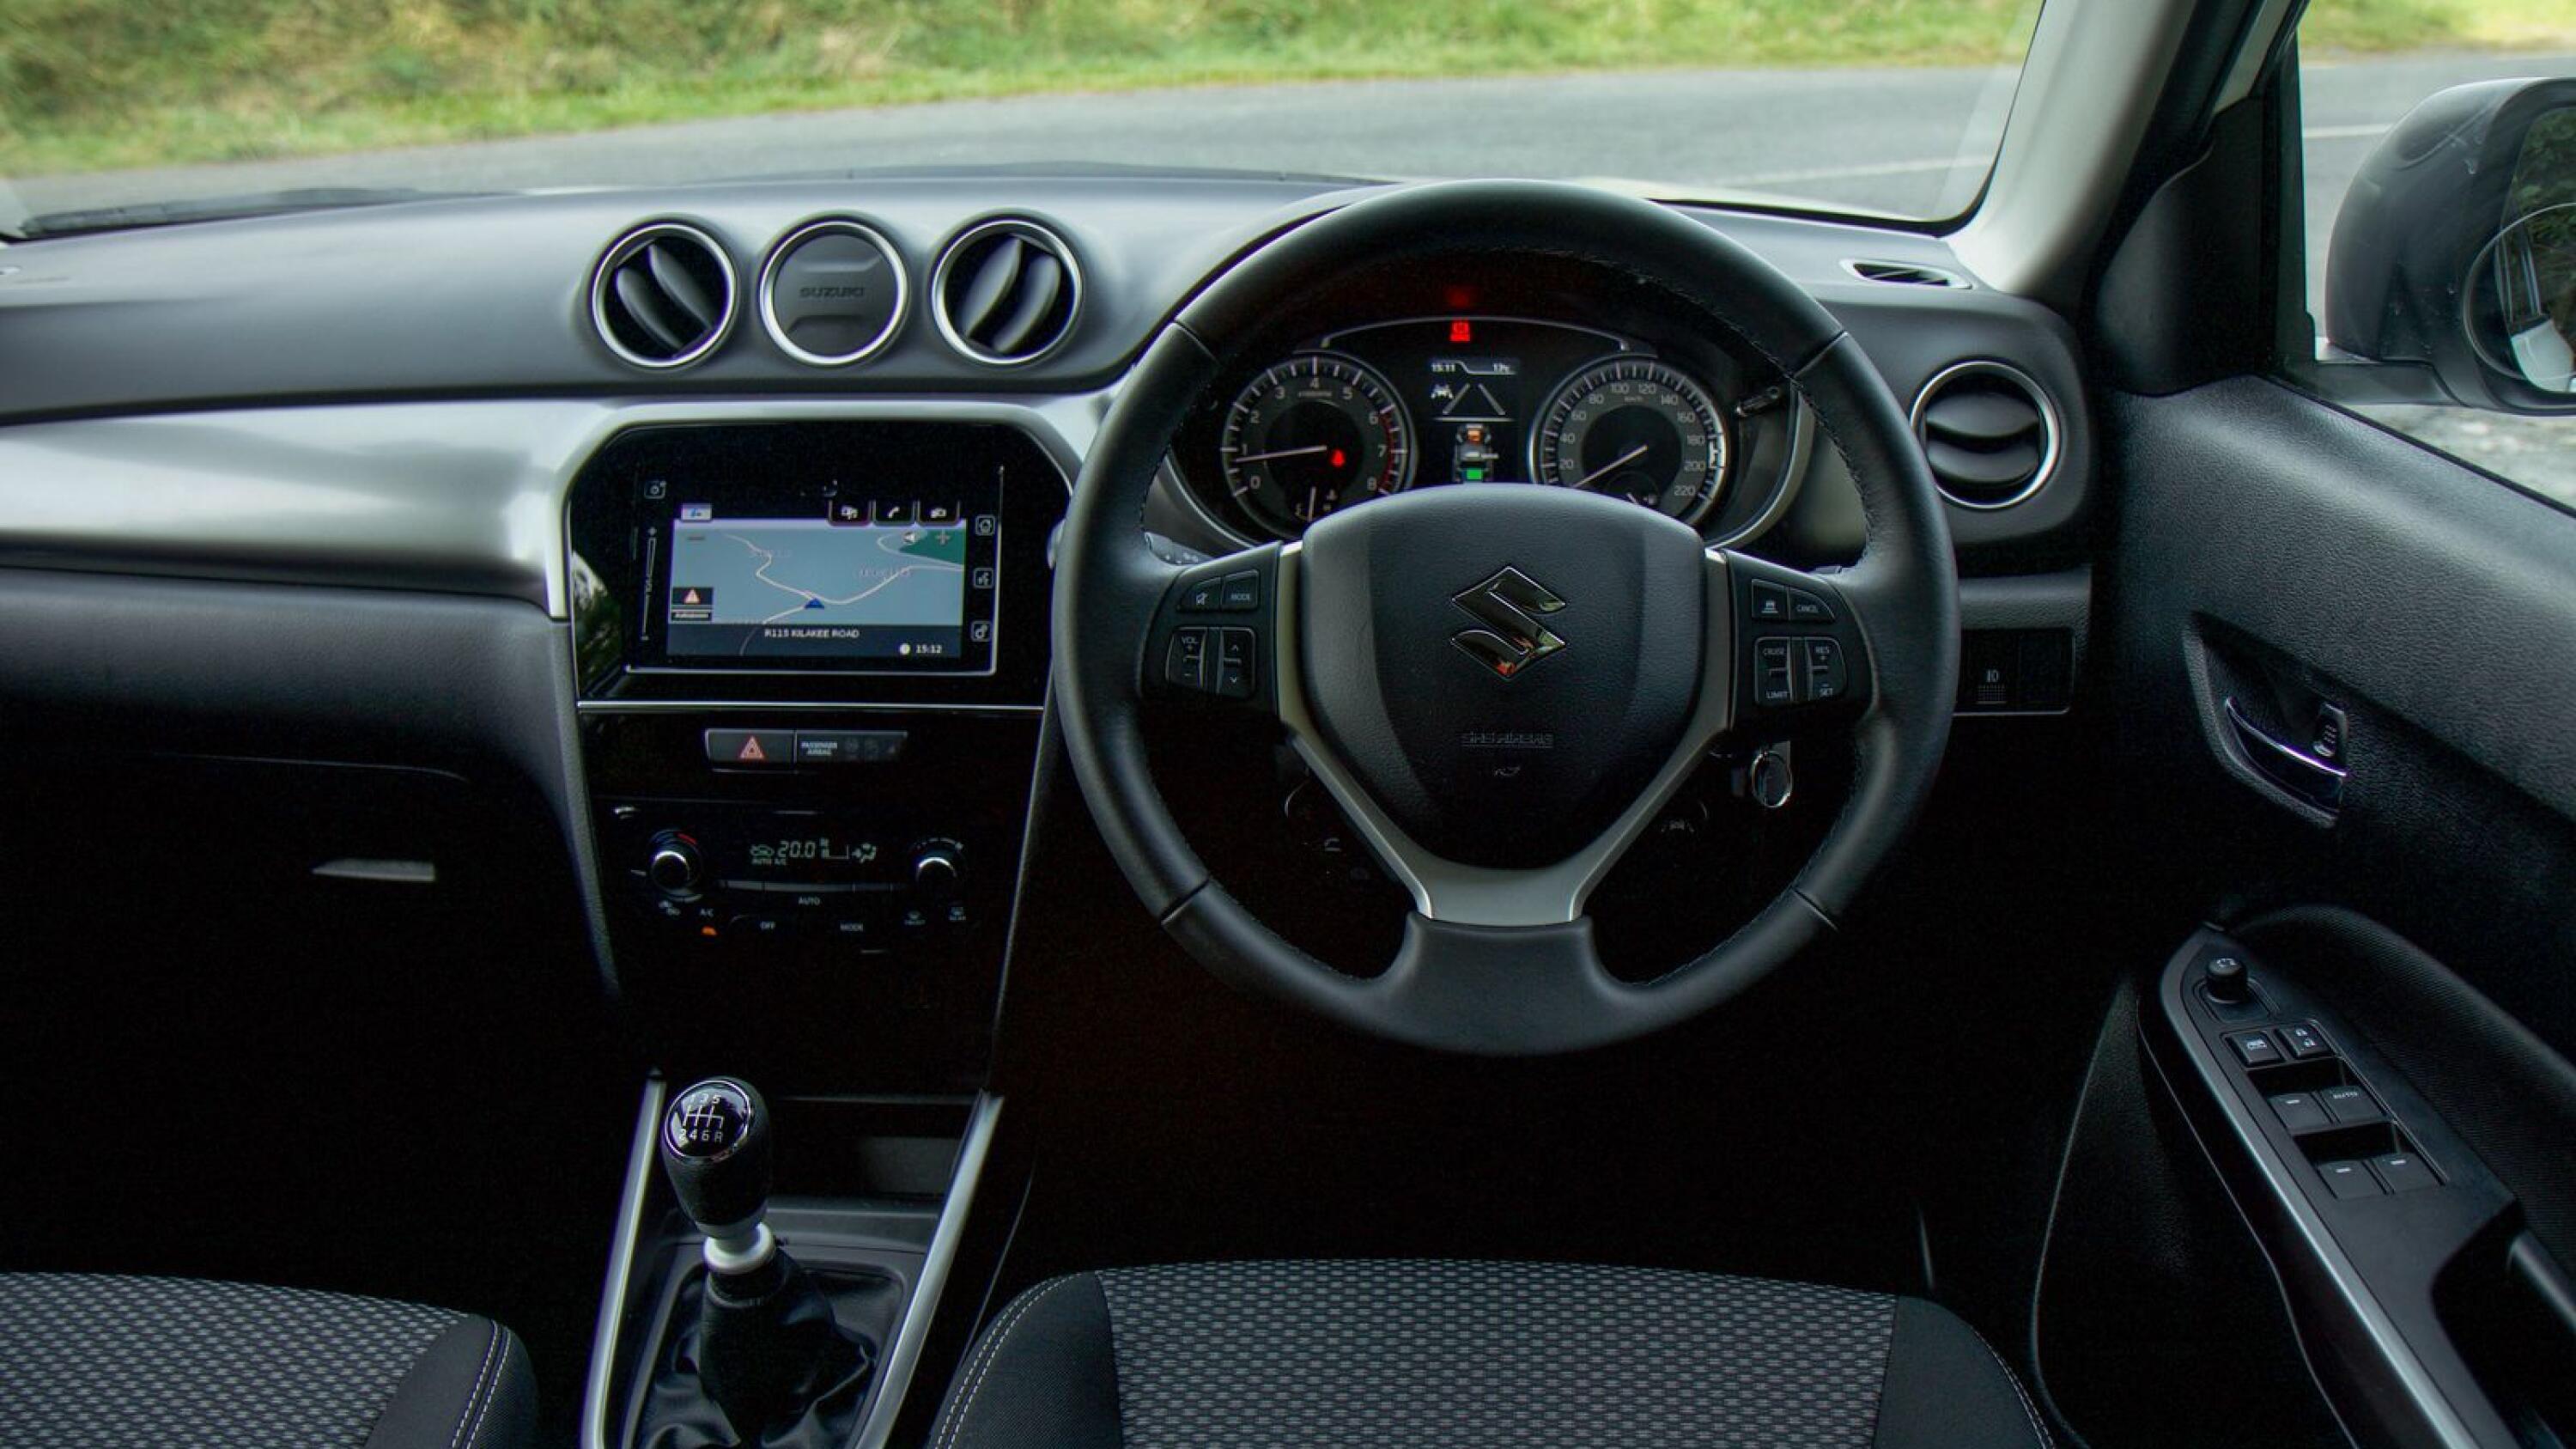 Interior design and technology – Suzuki Vitara - Just Auto